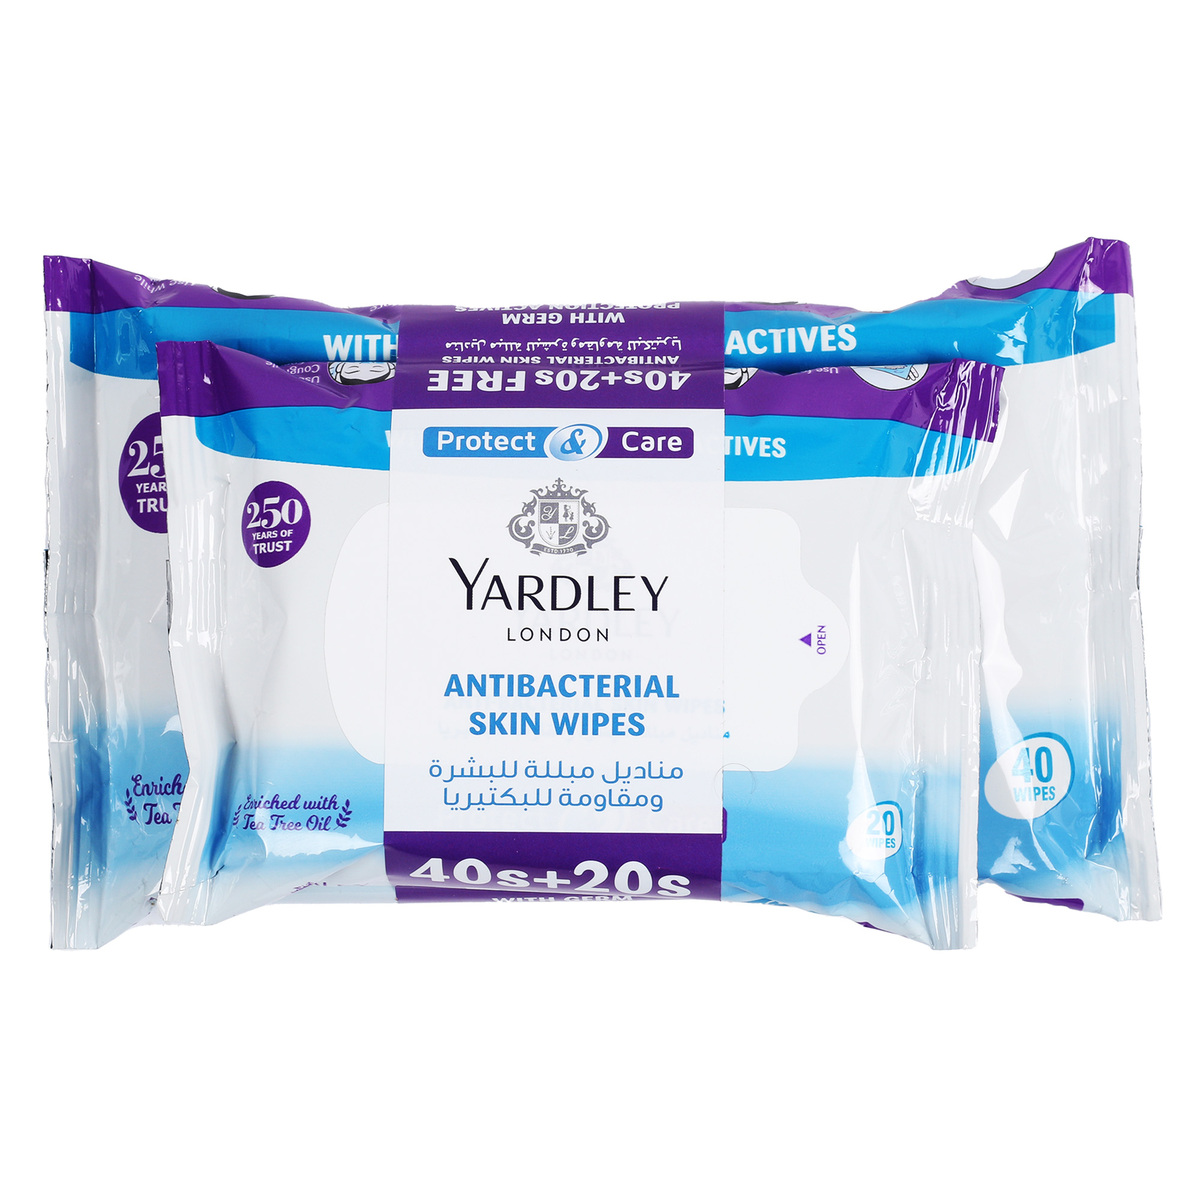 Yardley Anti-Bacterial Wipes 40+20